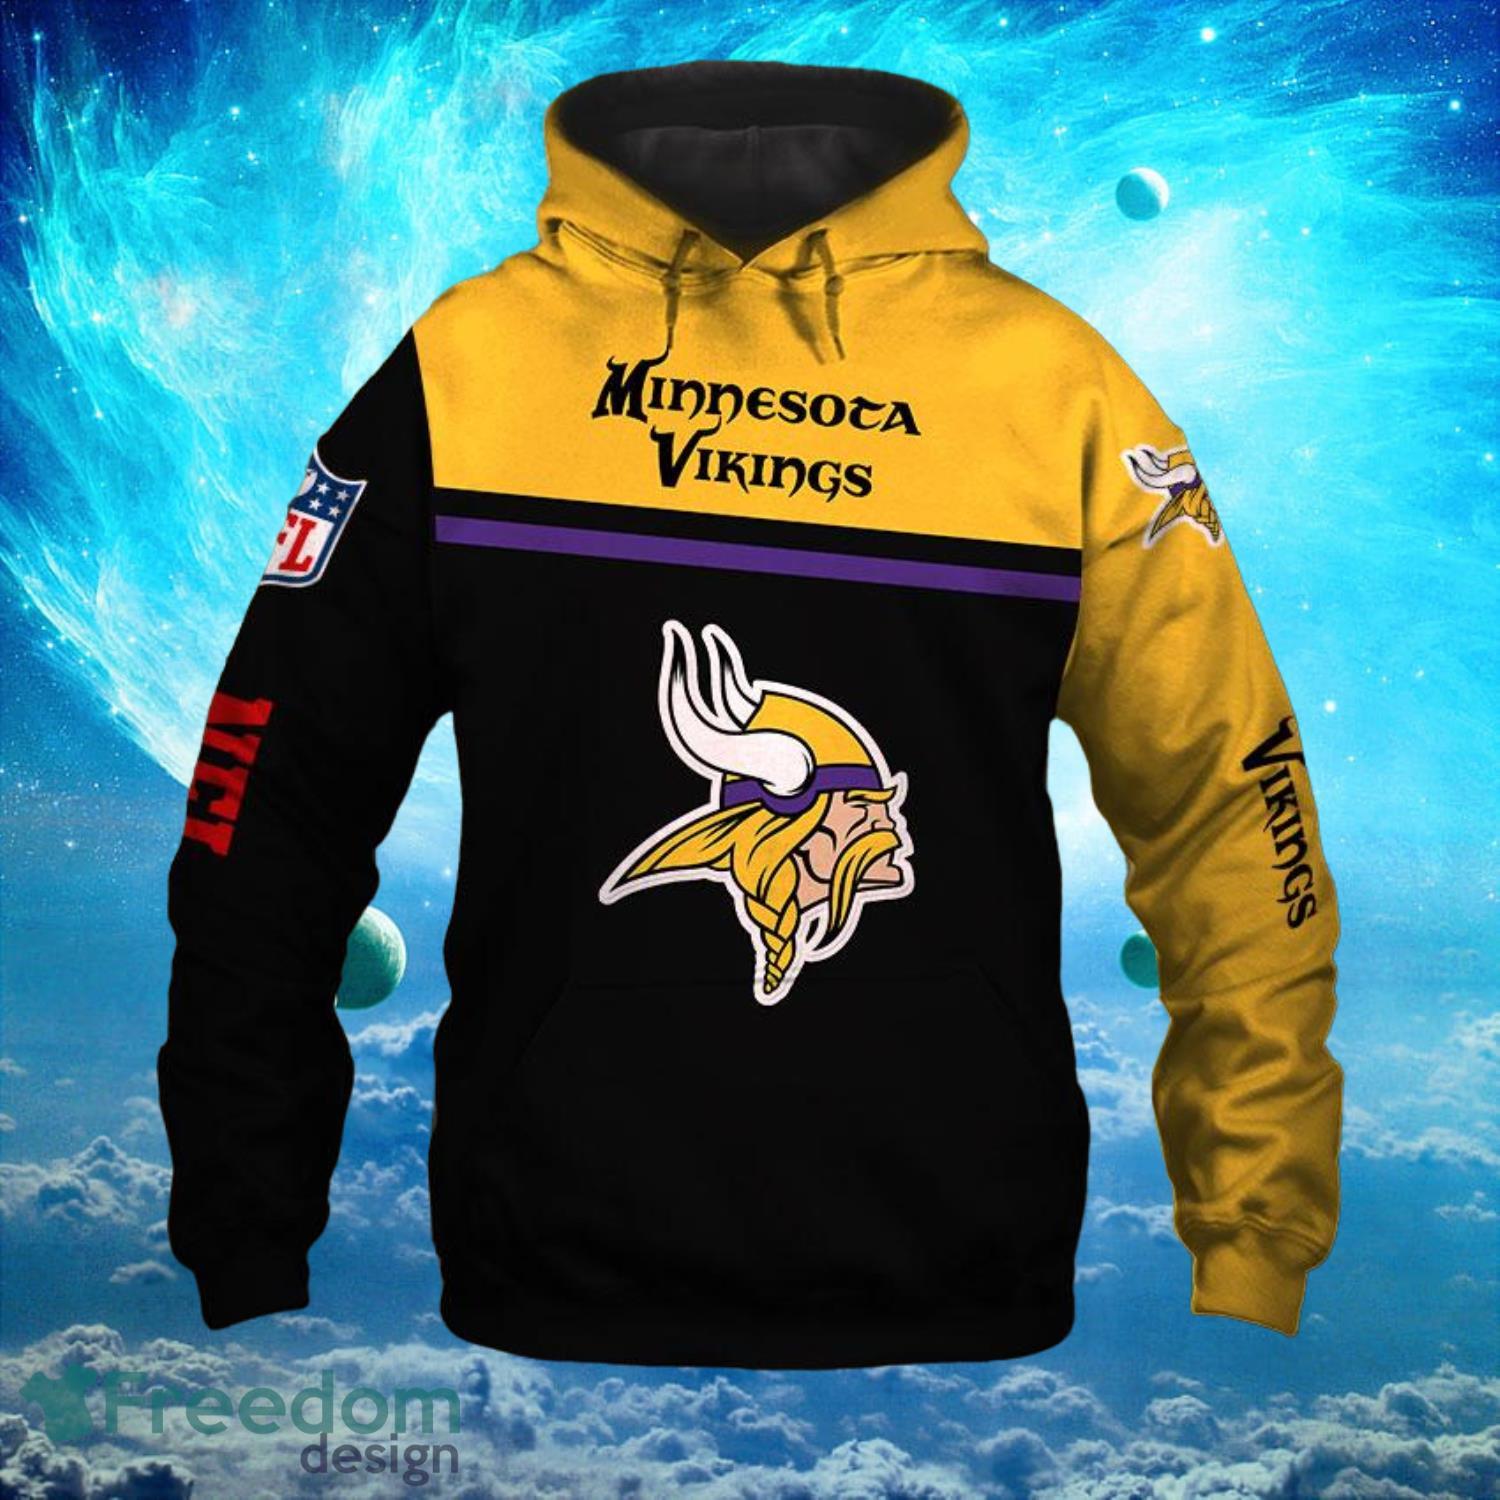 Minnesota Vikings Logo Death Hoodies Full Over Print Product Photo 1